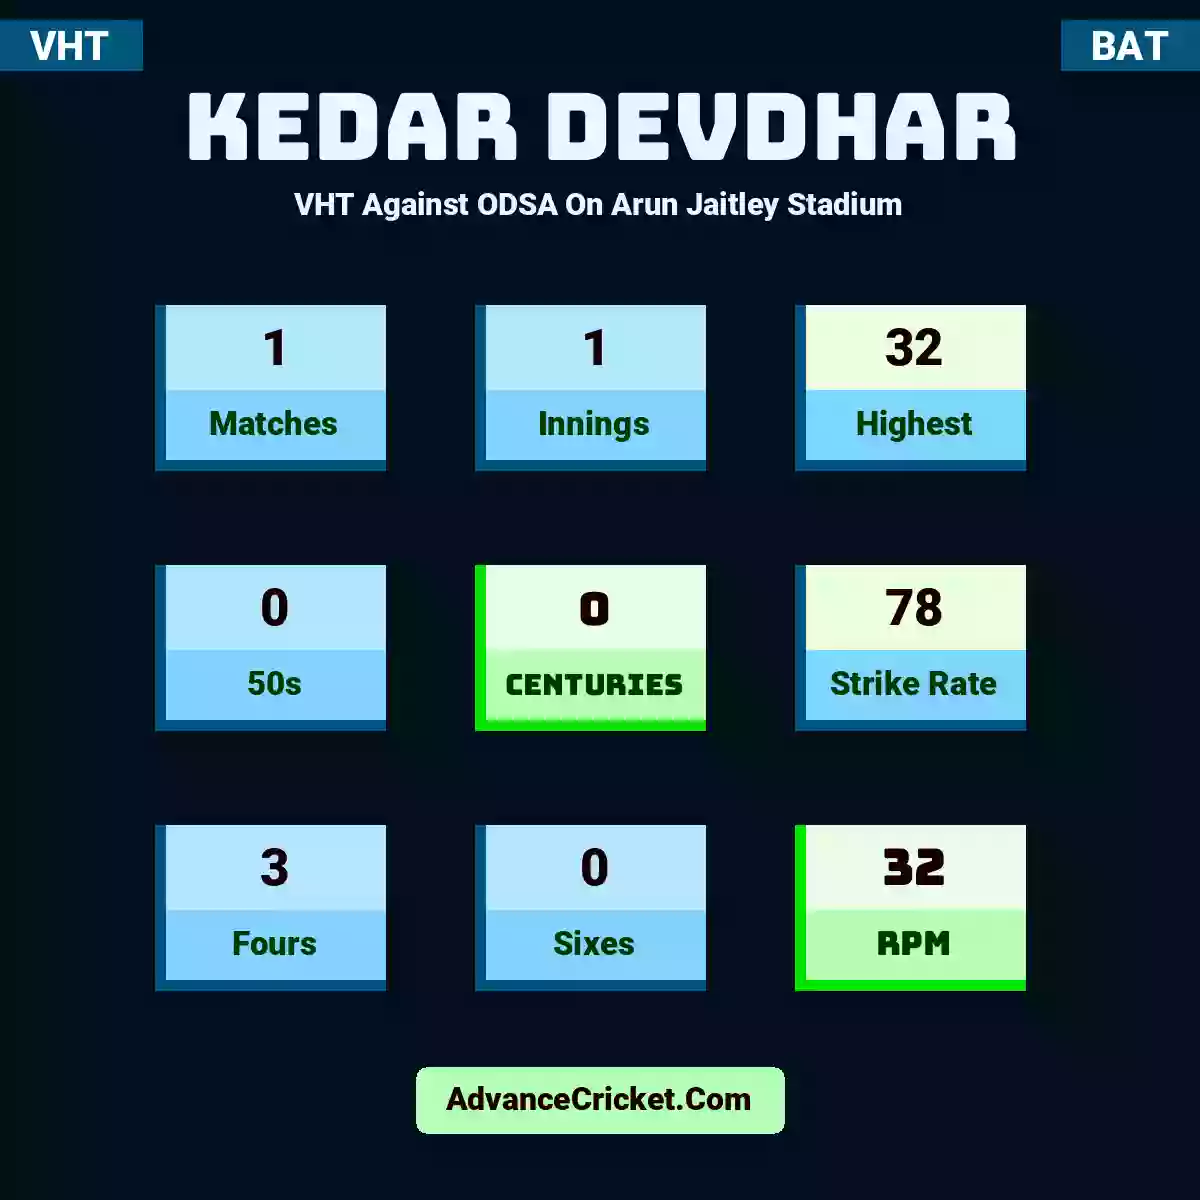 Kedar Devdhar VHT  Against ODSA On Arun Jaitley Stadium, Kedar Devdhar played 1 matches, scored 32 runs as highest, 0 half-centuries, and 0 centuries, with a strike rate of 78. K.Devdhar hit 3 fours and 0 sixes, with an RPM of 32.